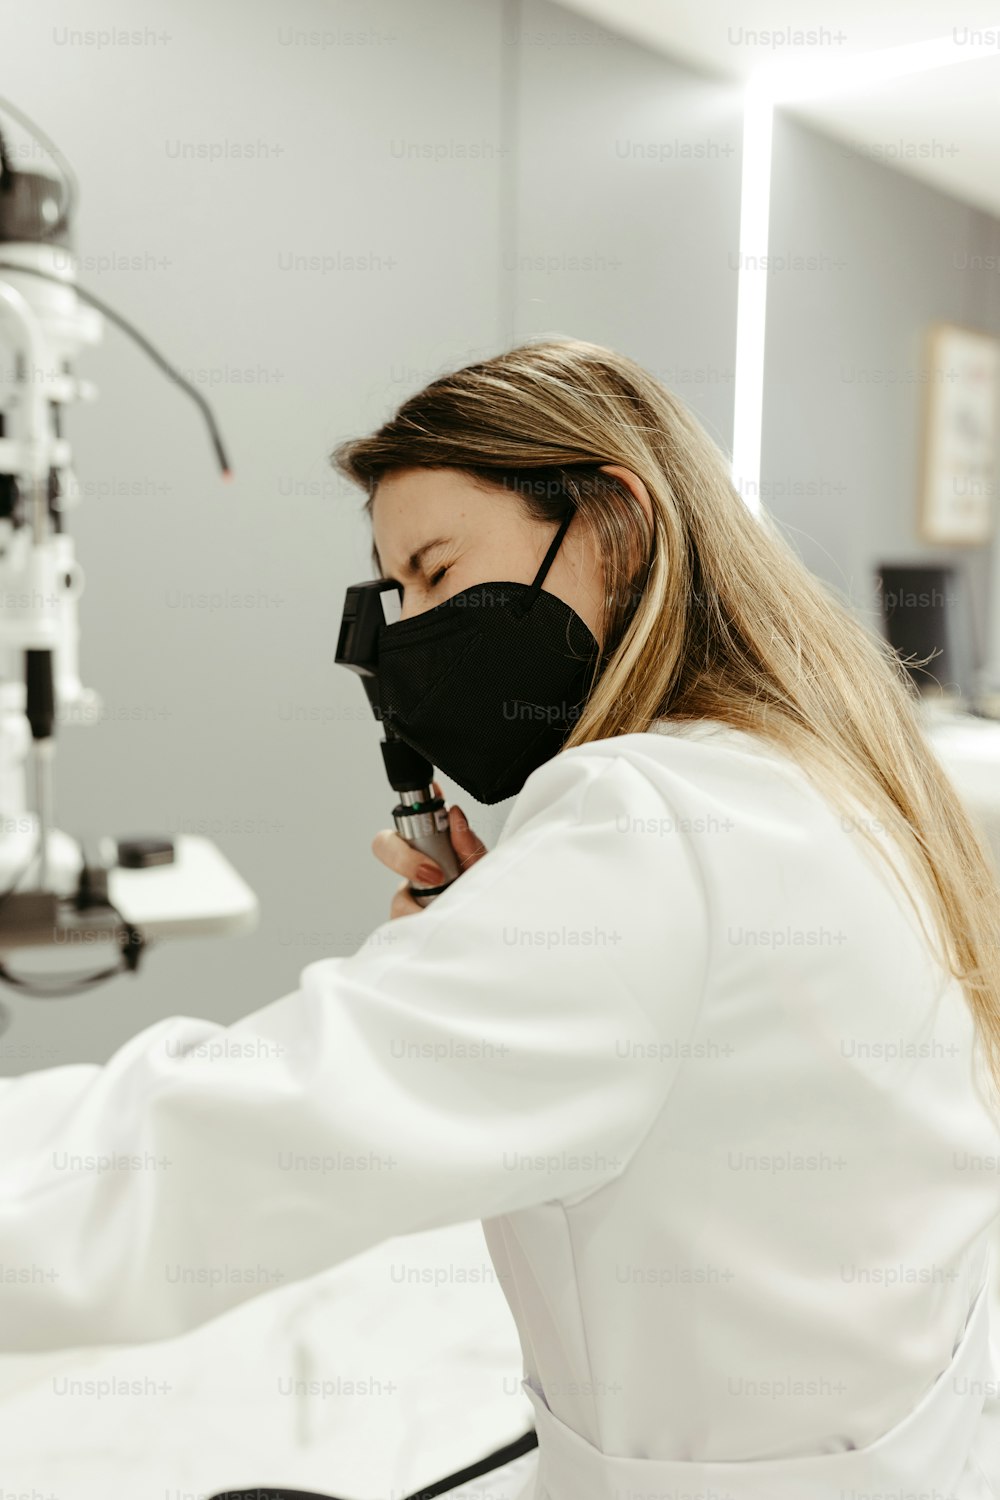 Una mujer con una bata blanca de laboratorio mirando un microscopio